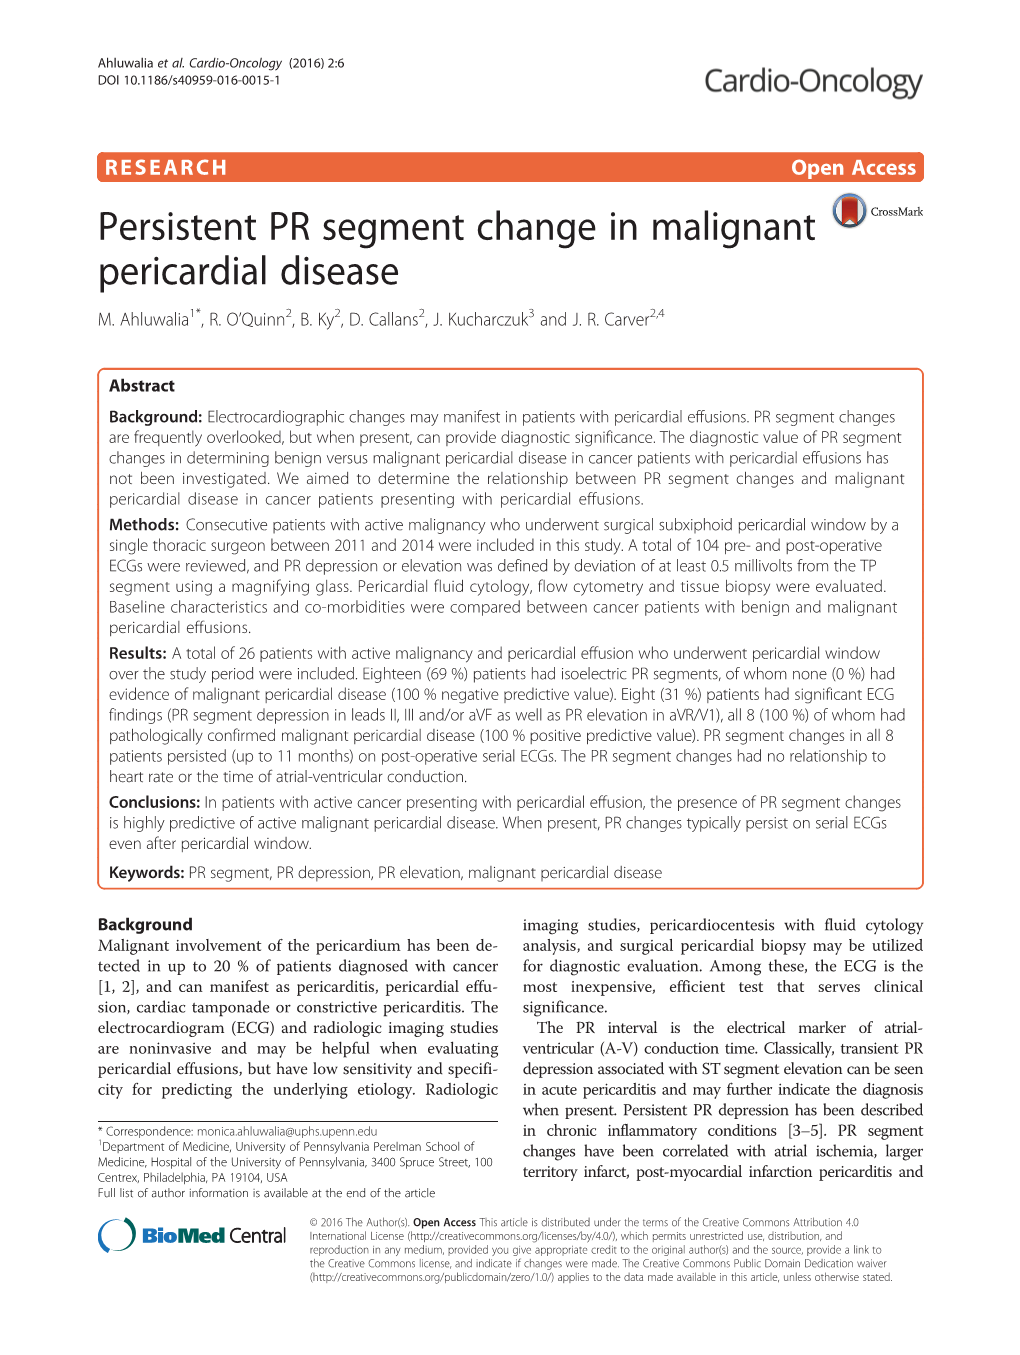 Persistent PR Segment Change in Malignant Pericardial Disease M